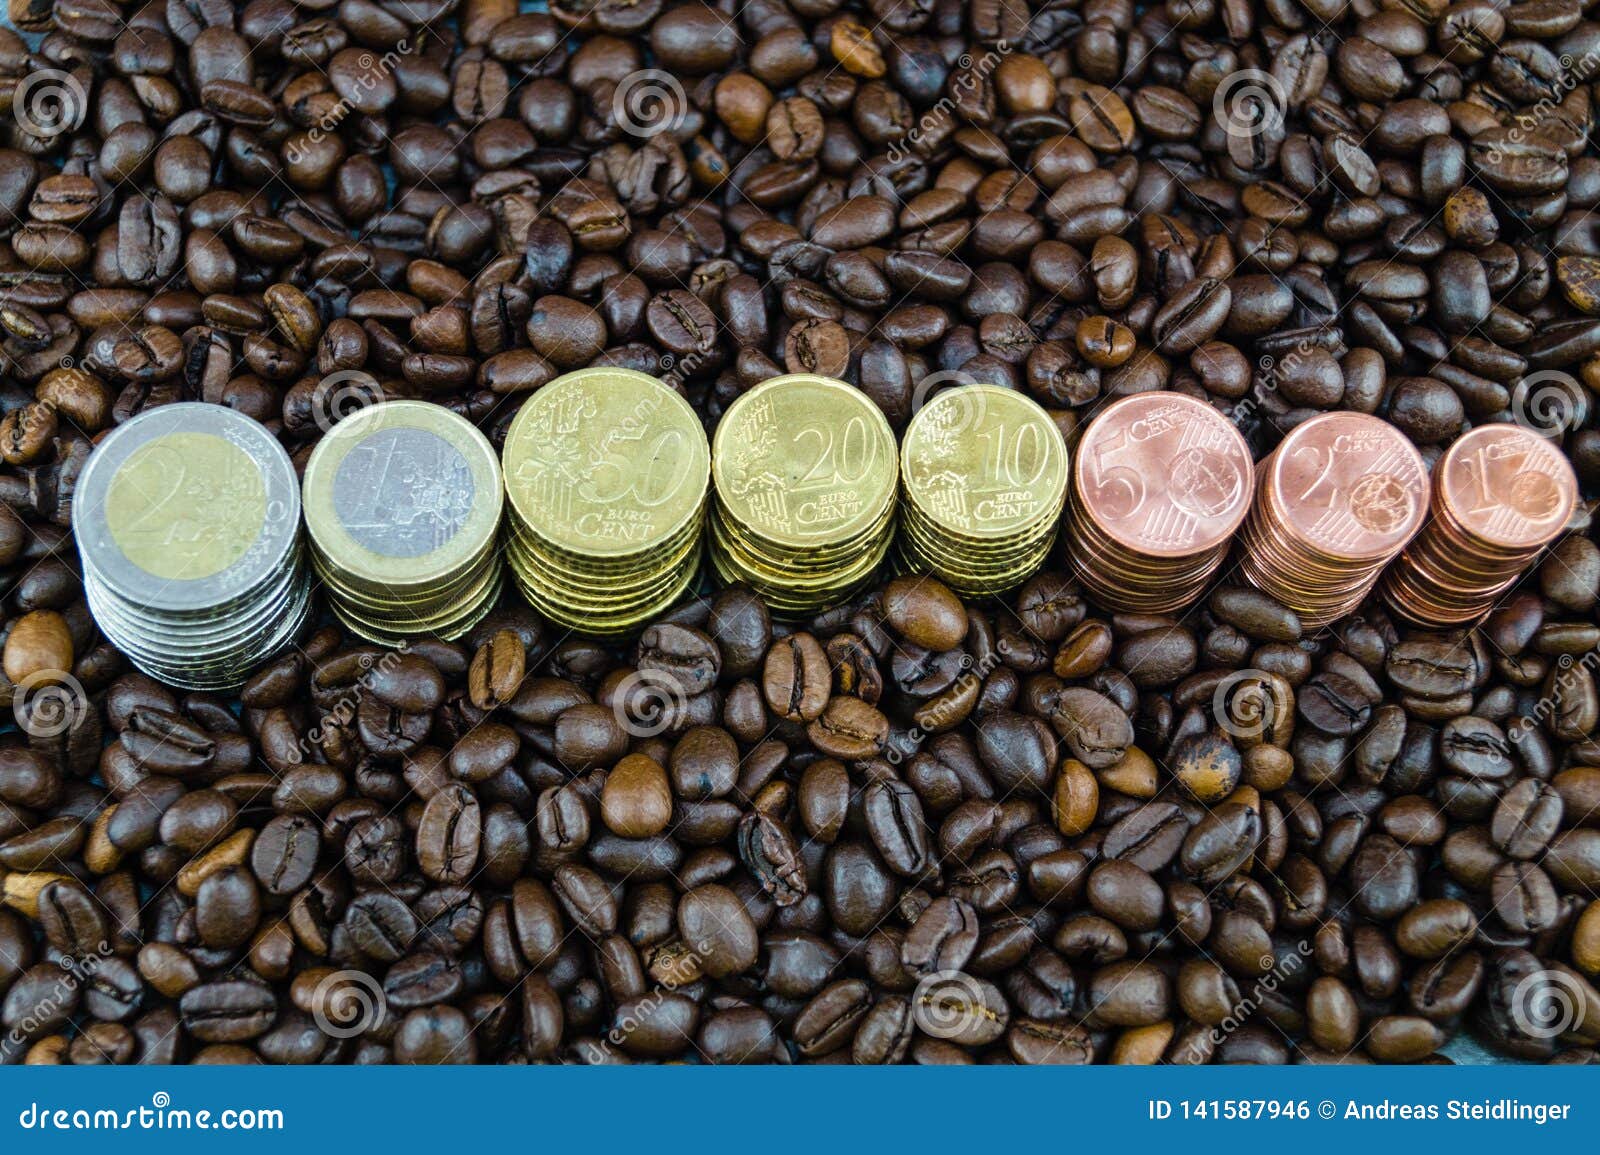 Fair trade coffee Price stock photo. Image of fair, credit 141587946